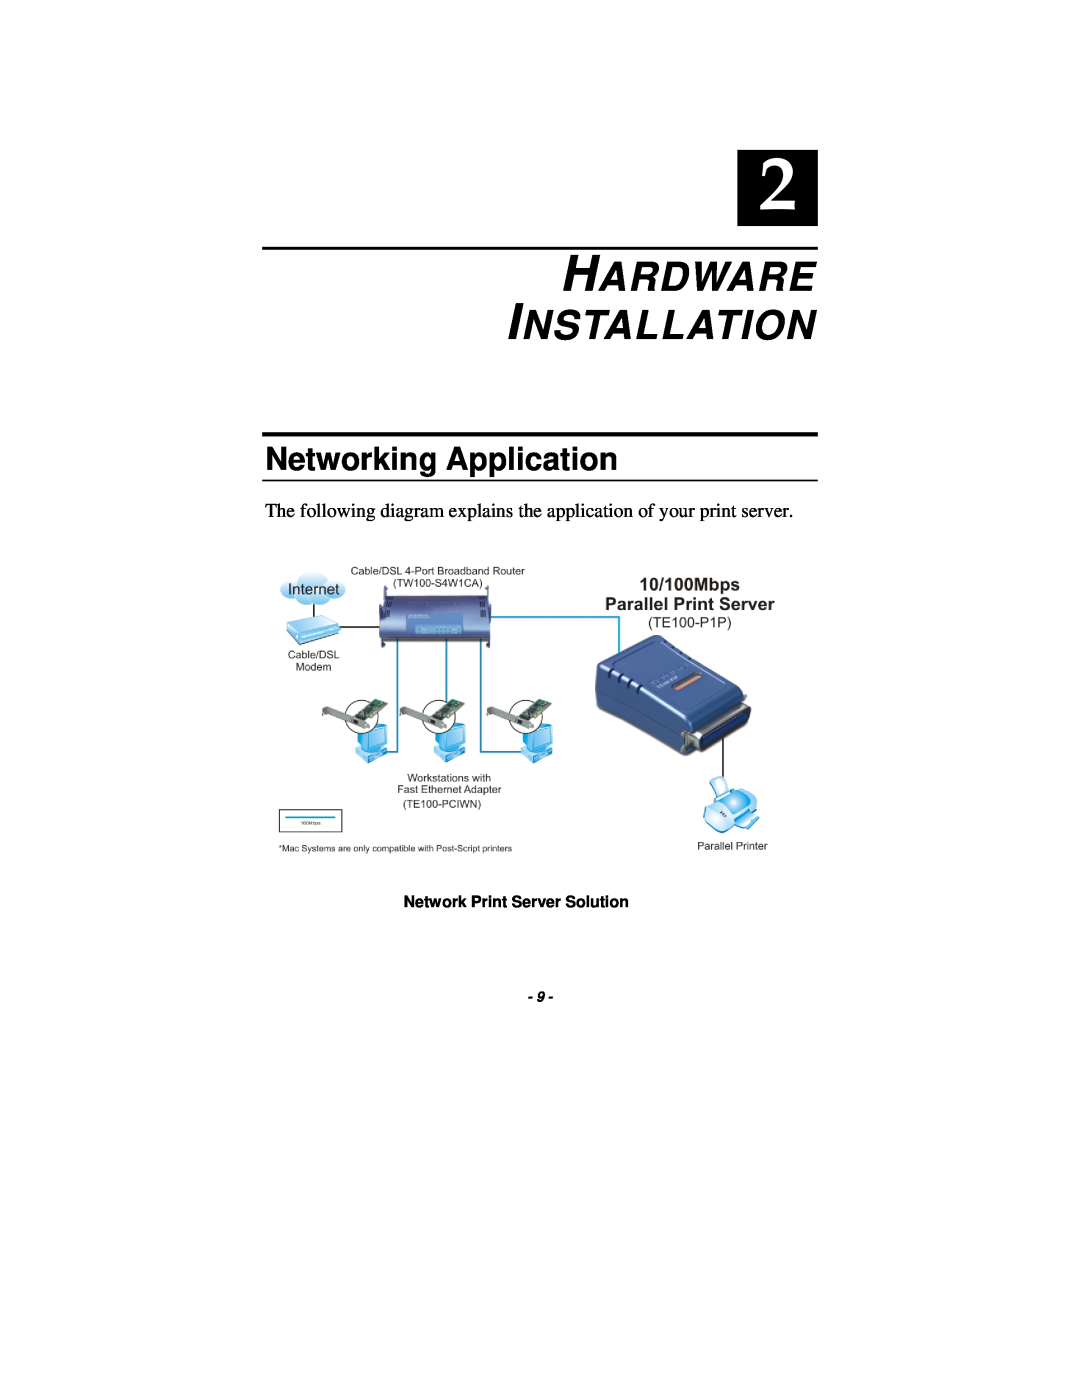 TRENDnet TE100-P1P manual Hardware Installation, Networking Application, Network Print Server Solution 